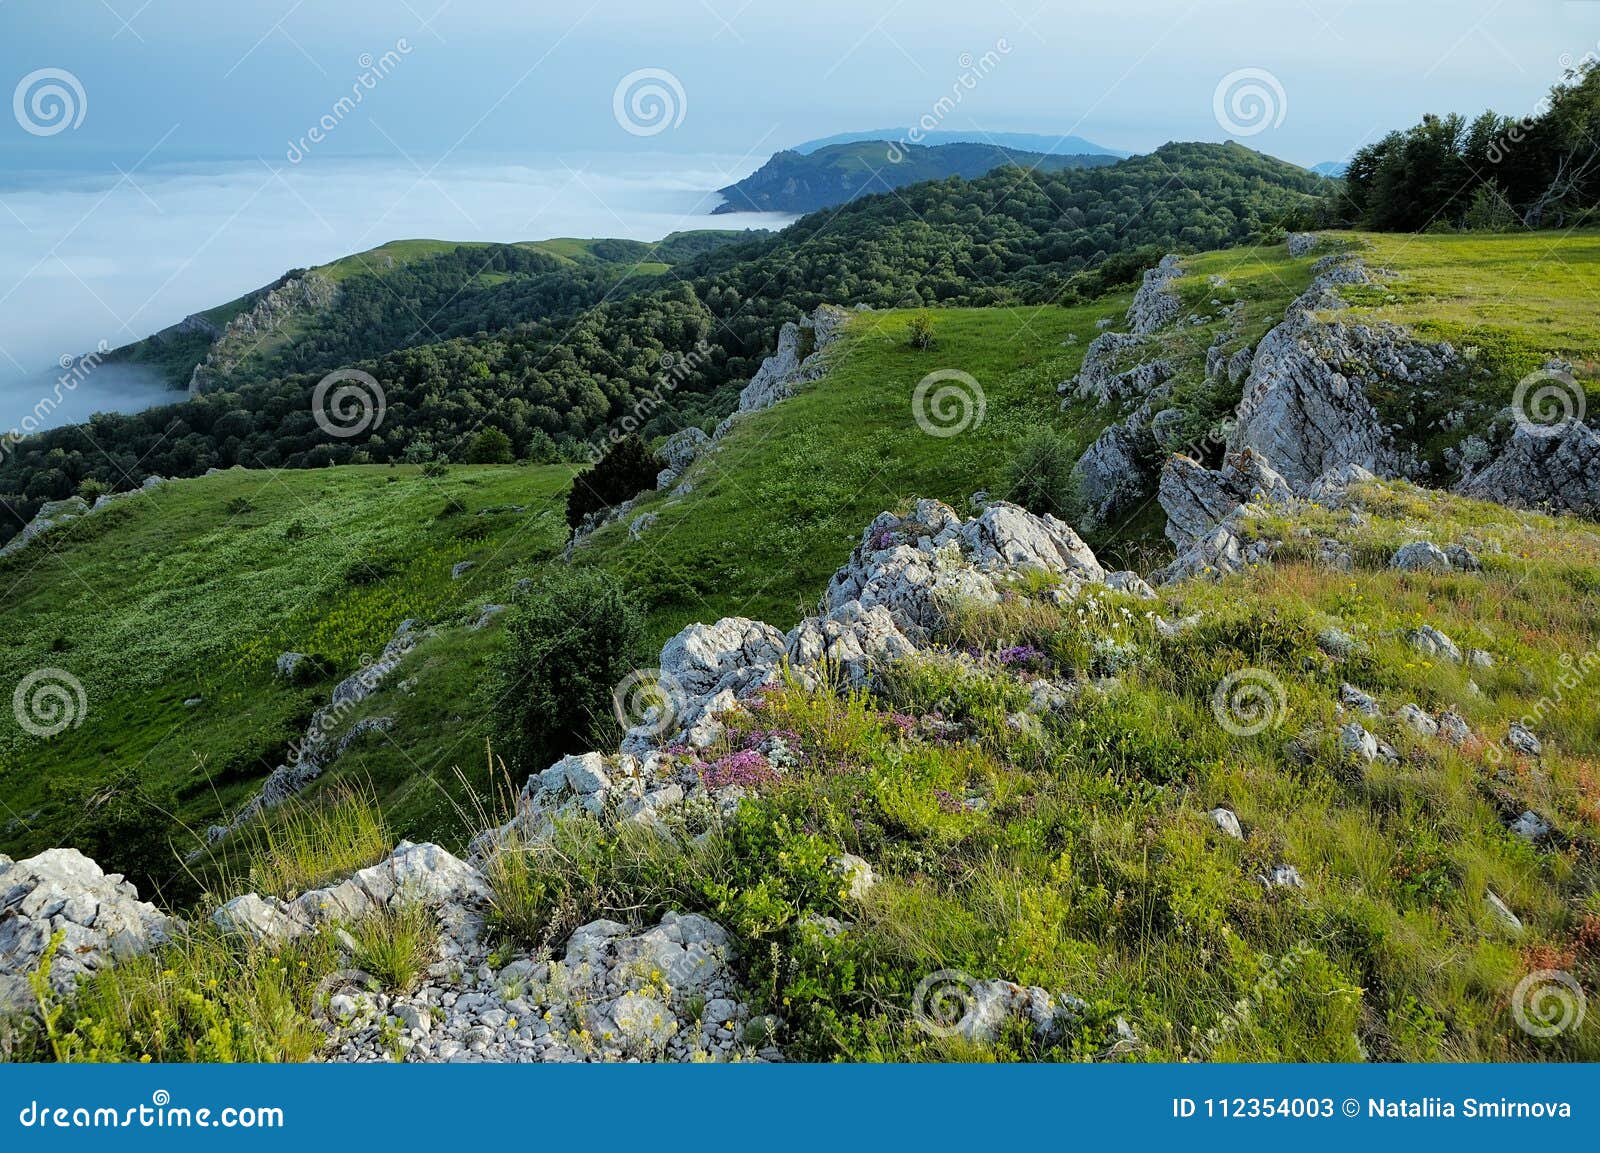 the crimean deeplis-haya mountain in summer